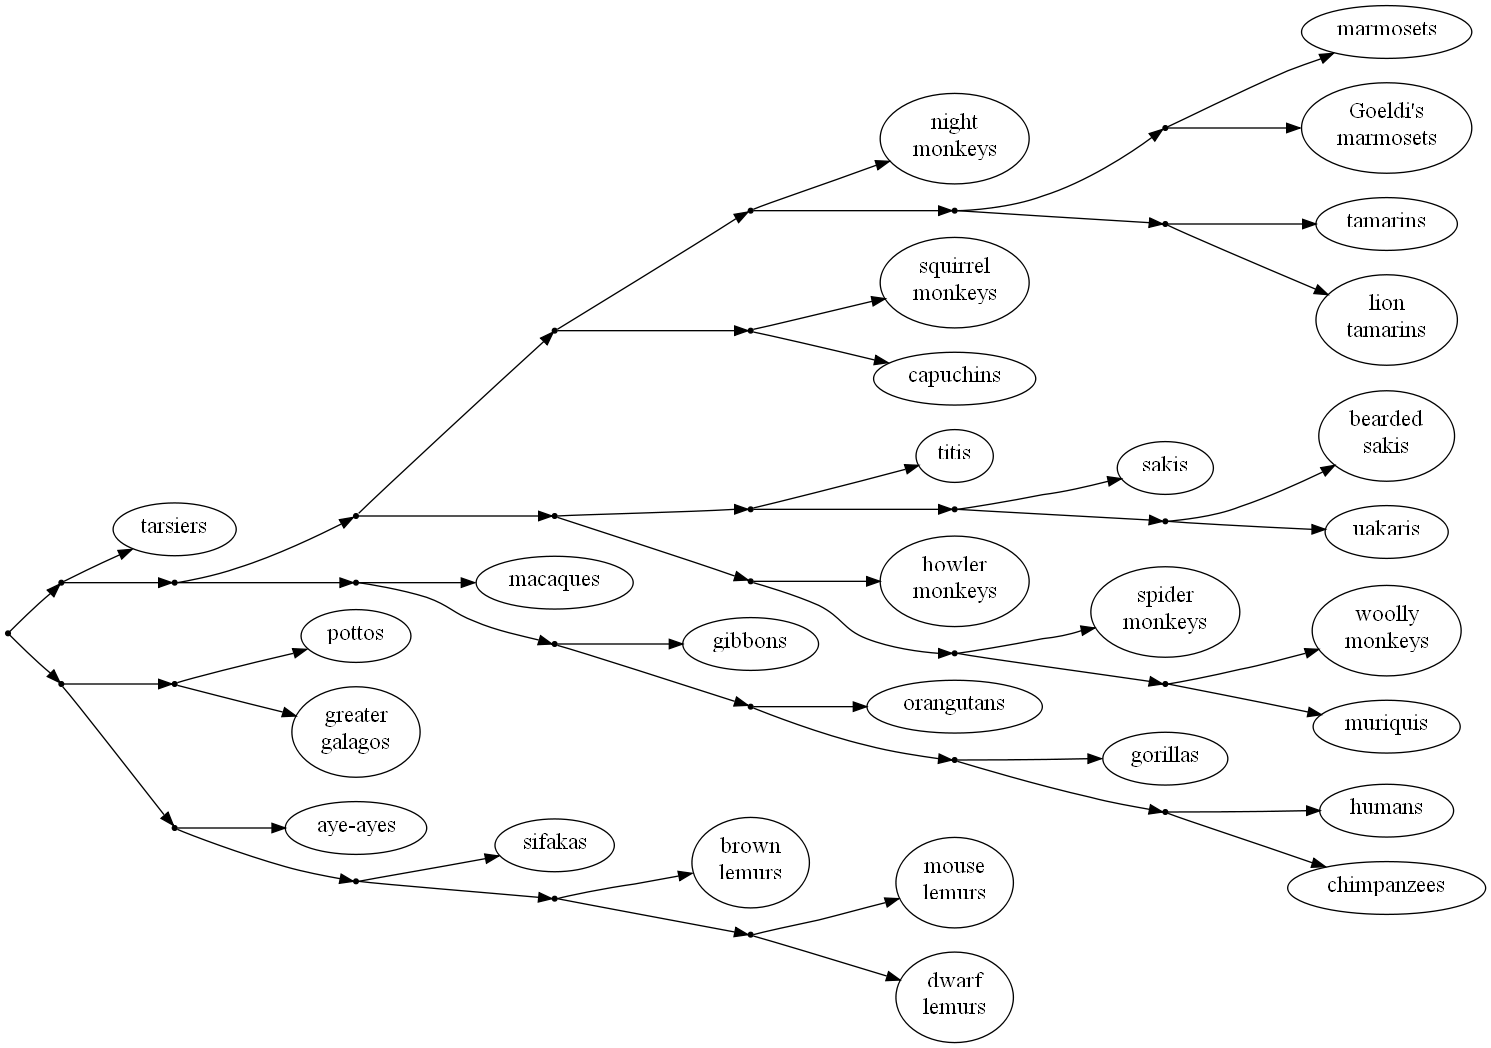 phylogenetic tree of primates